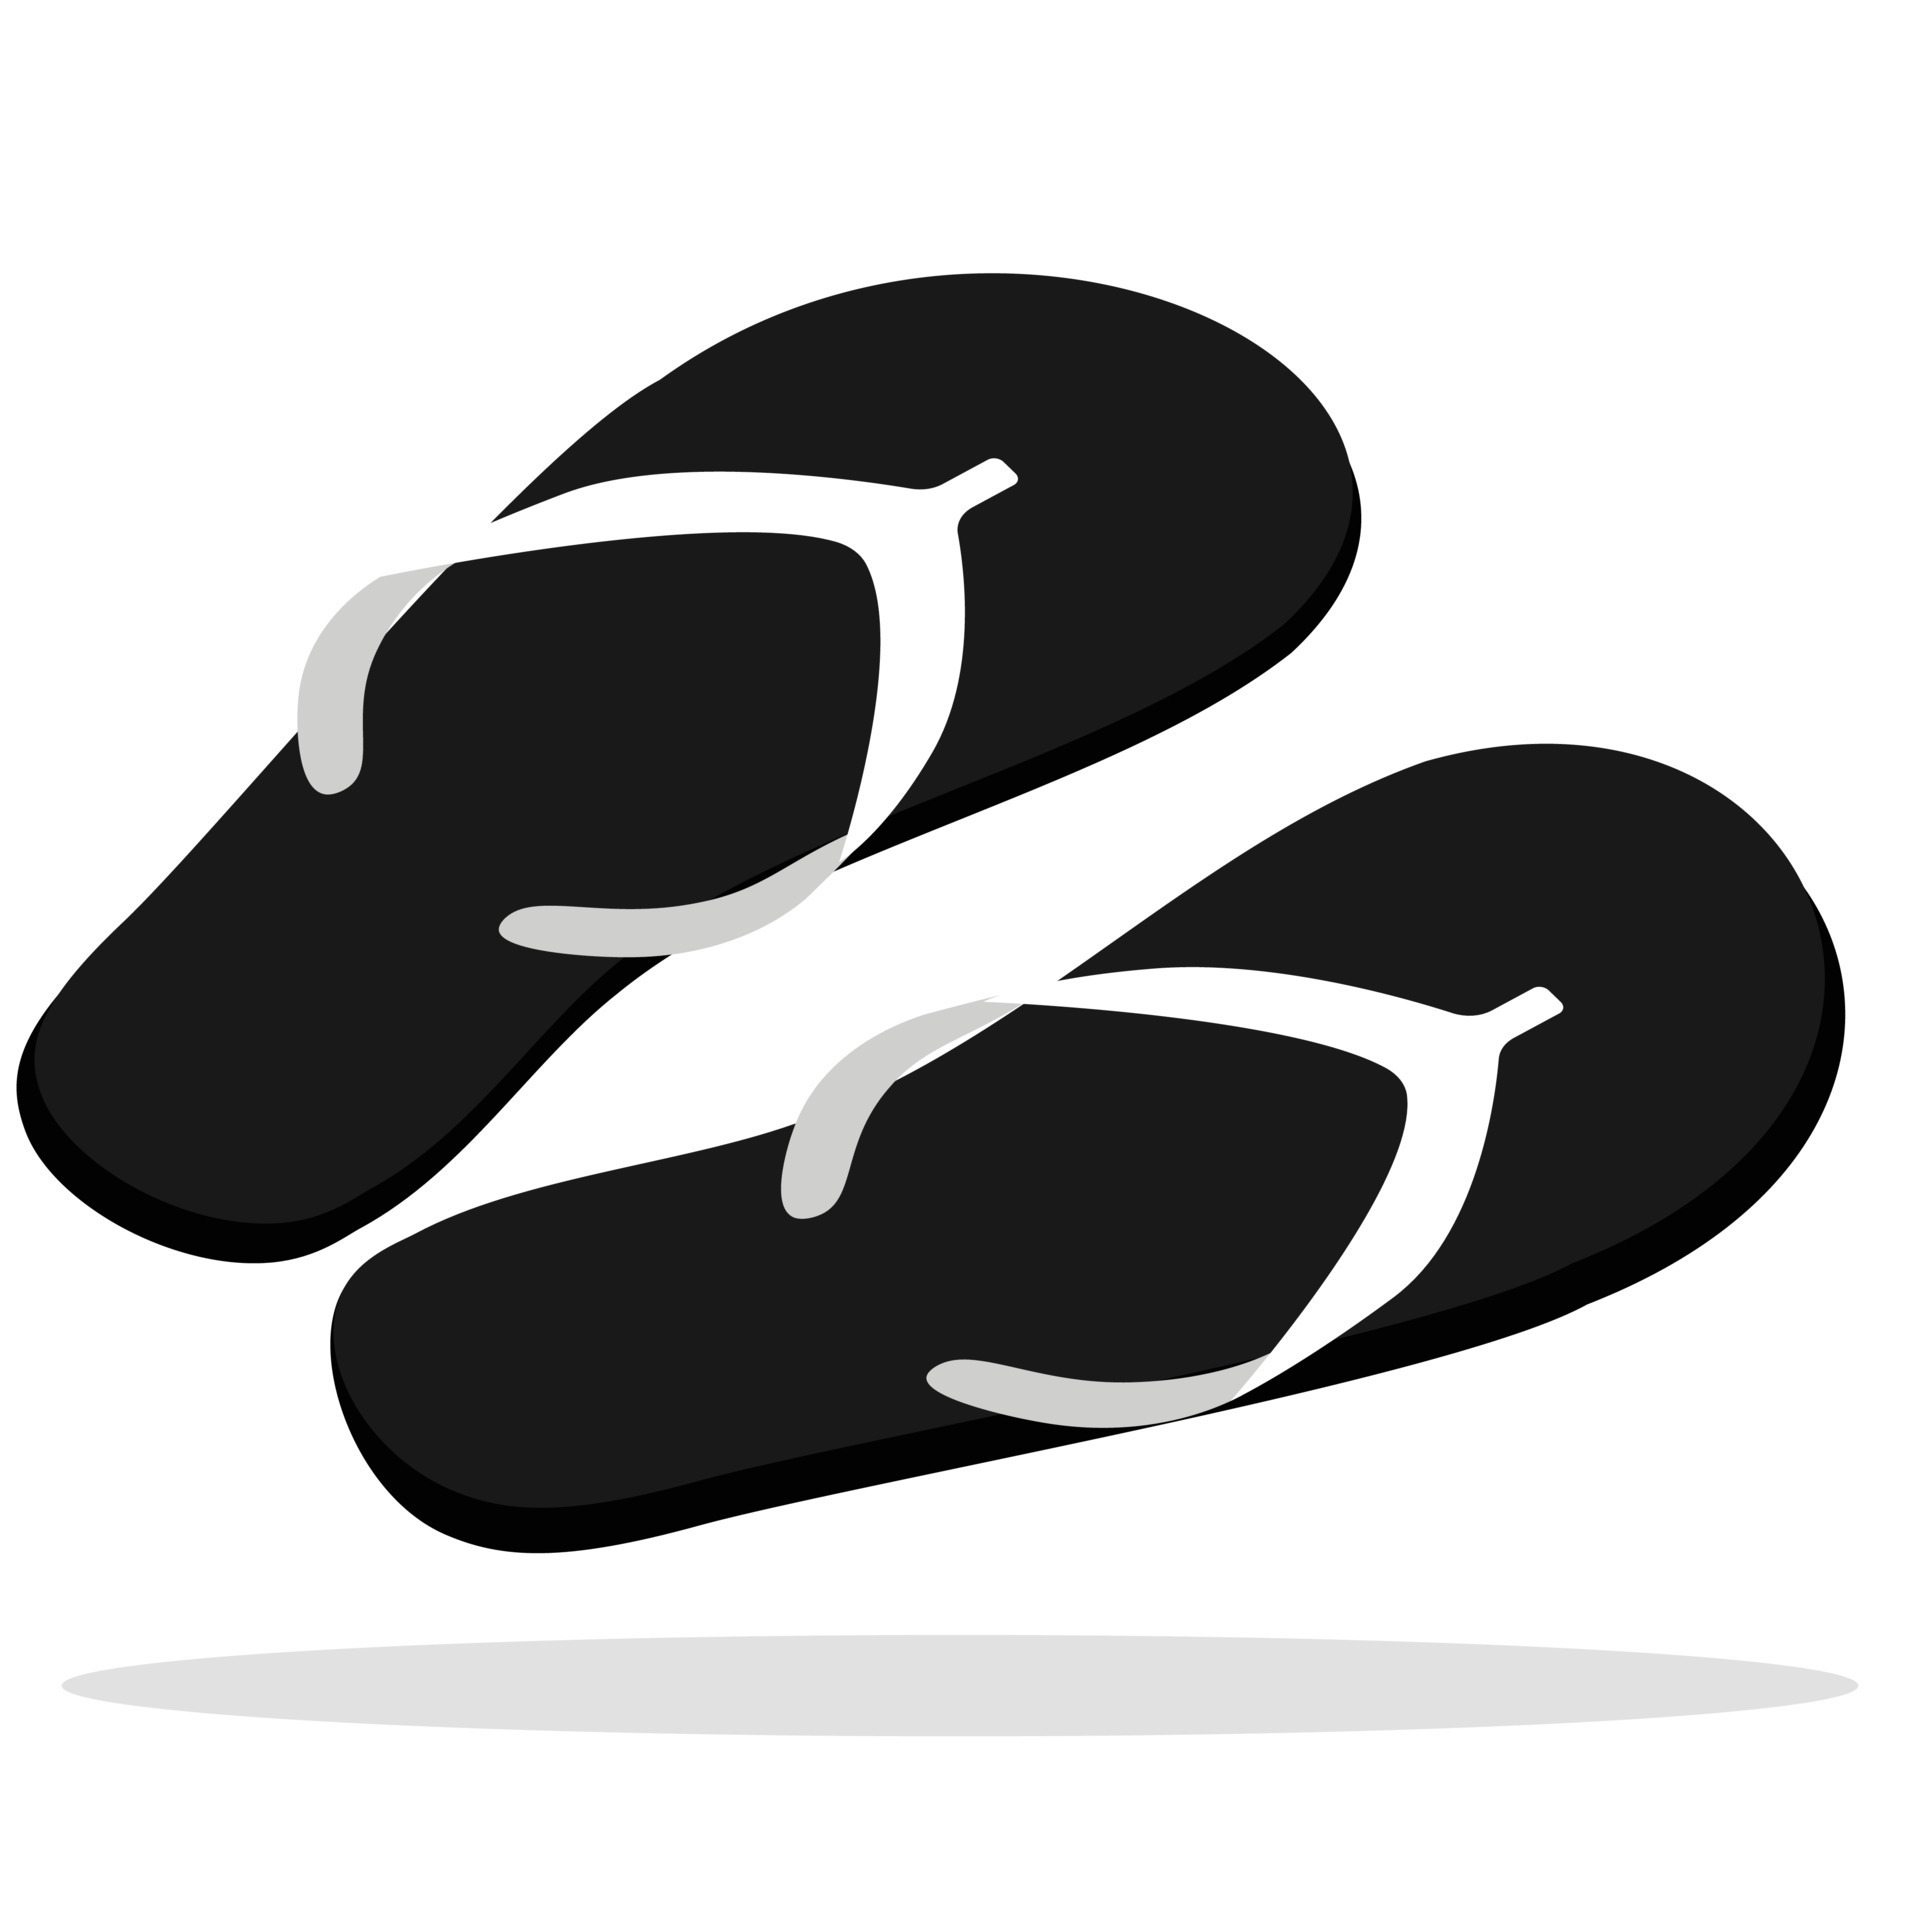 slippers icon illustration design | Stock vector | Colourbox